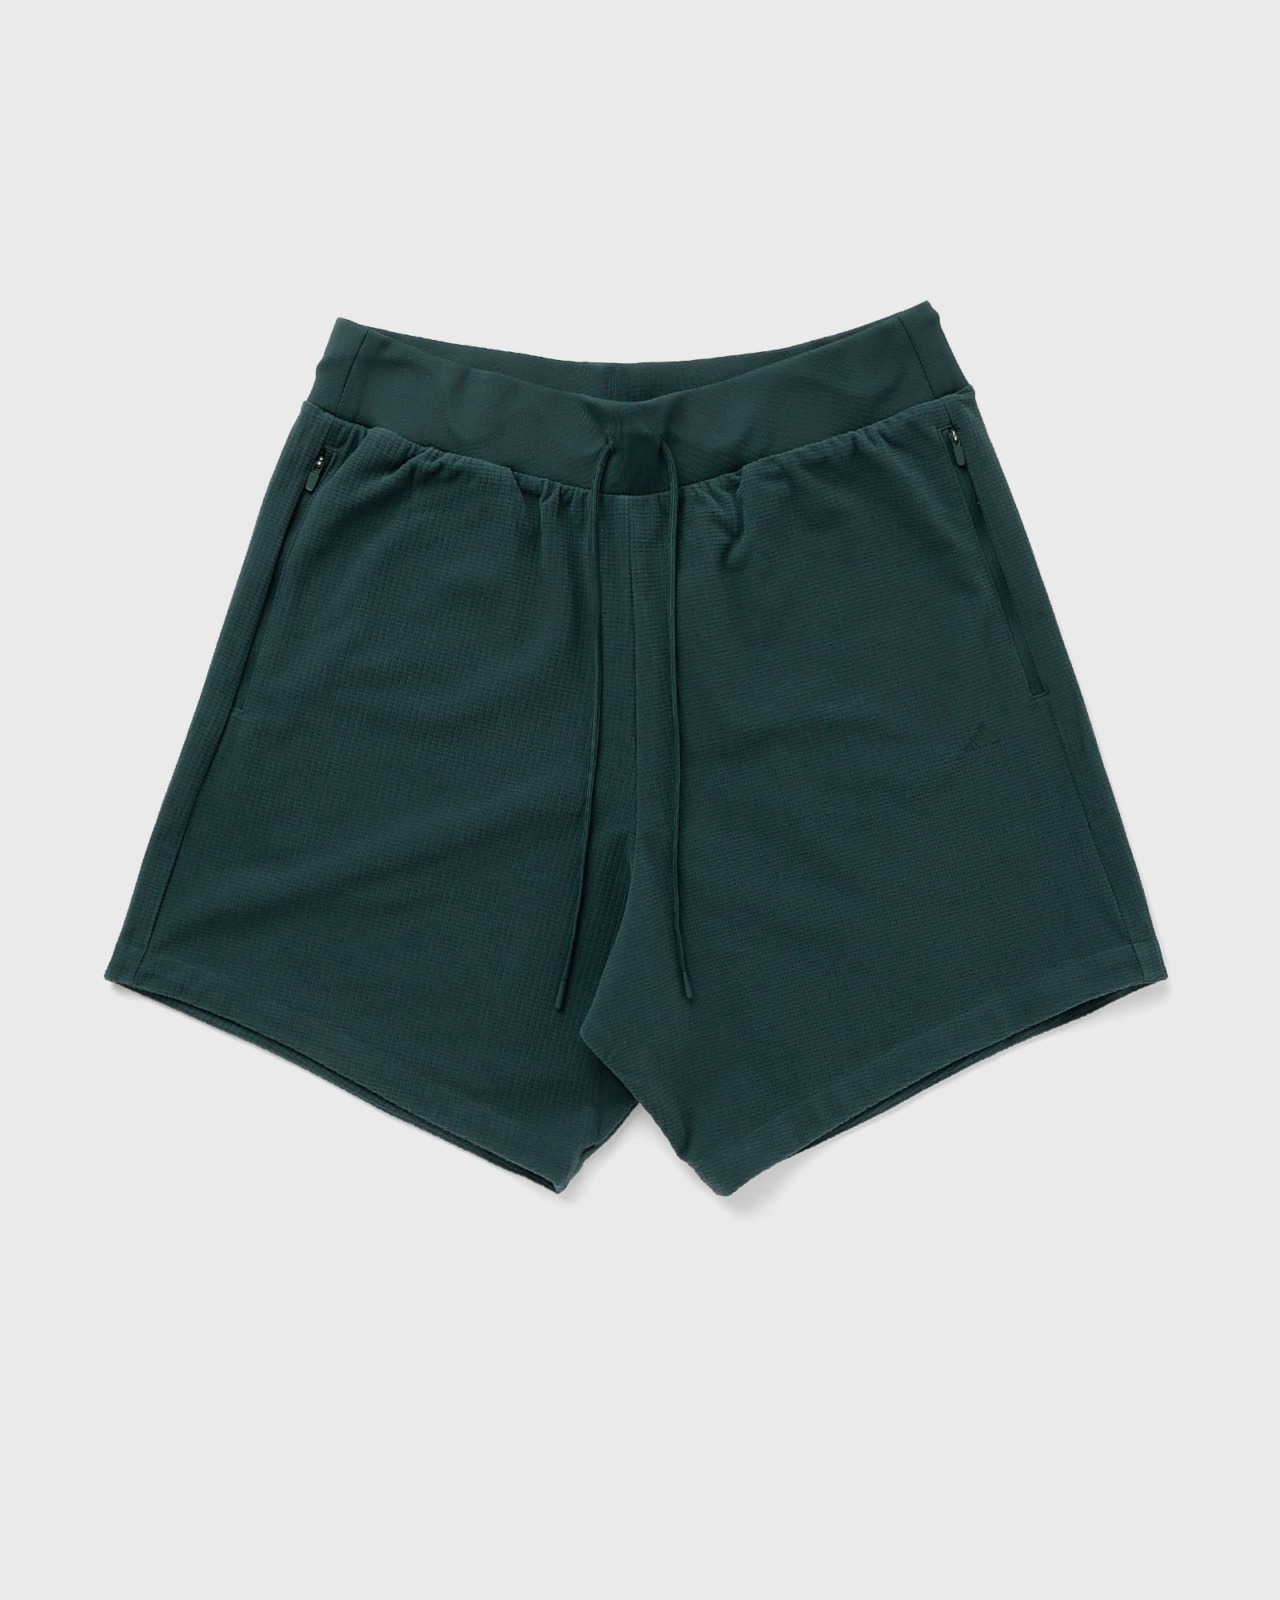 Bstn - Men's Shorts in Green by Adidas GOOFASH